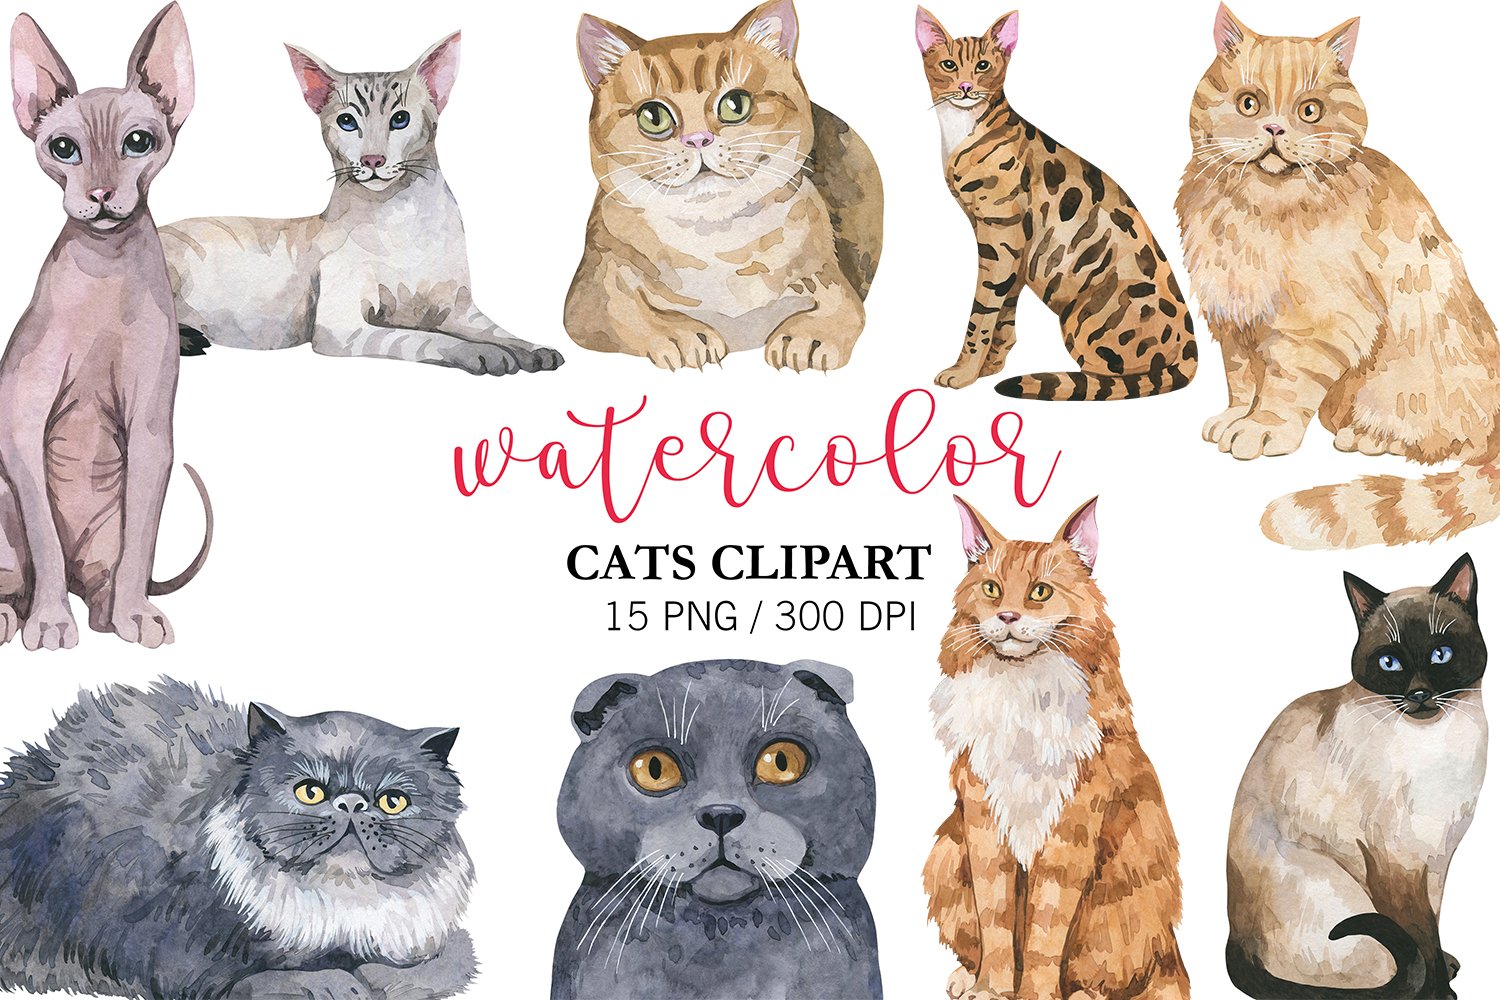 Printable Kawaii Cat Kitten Kitty Doodles, Cute clipart, Kitty icons, Pet  illustration, stickers, Planner supplies